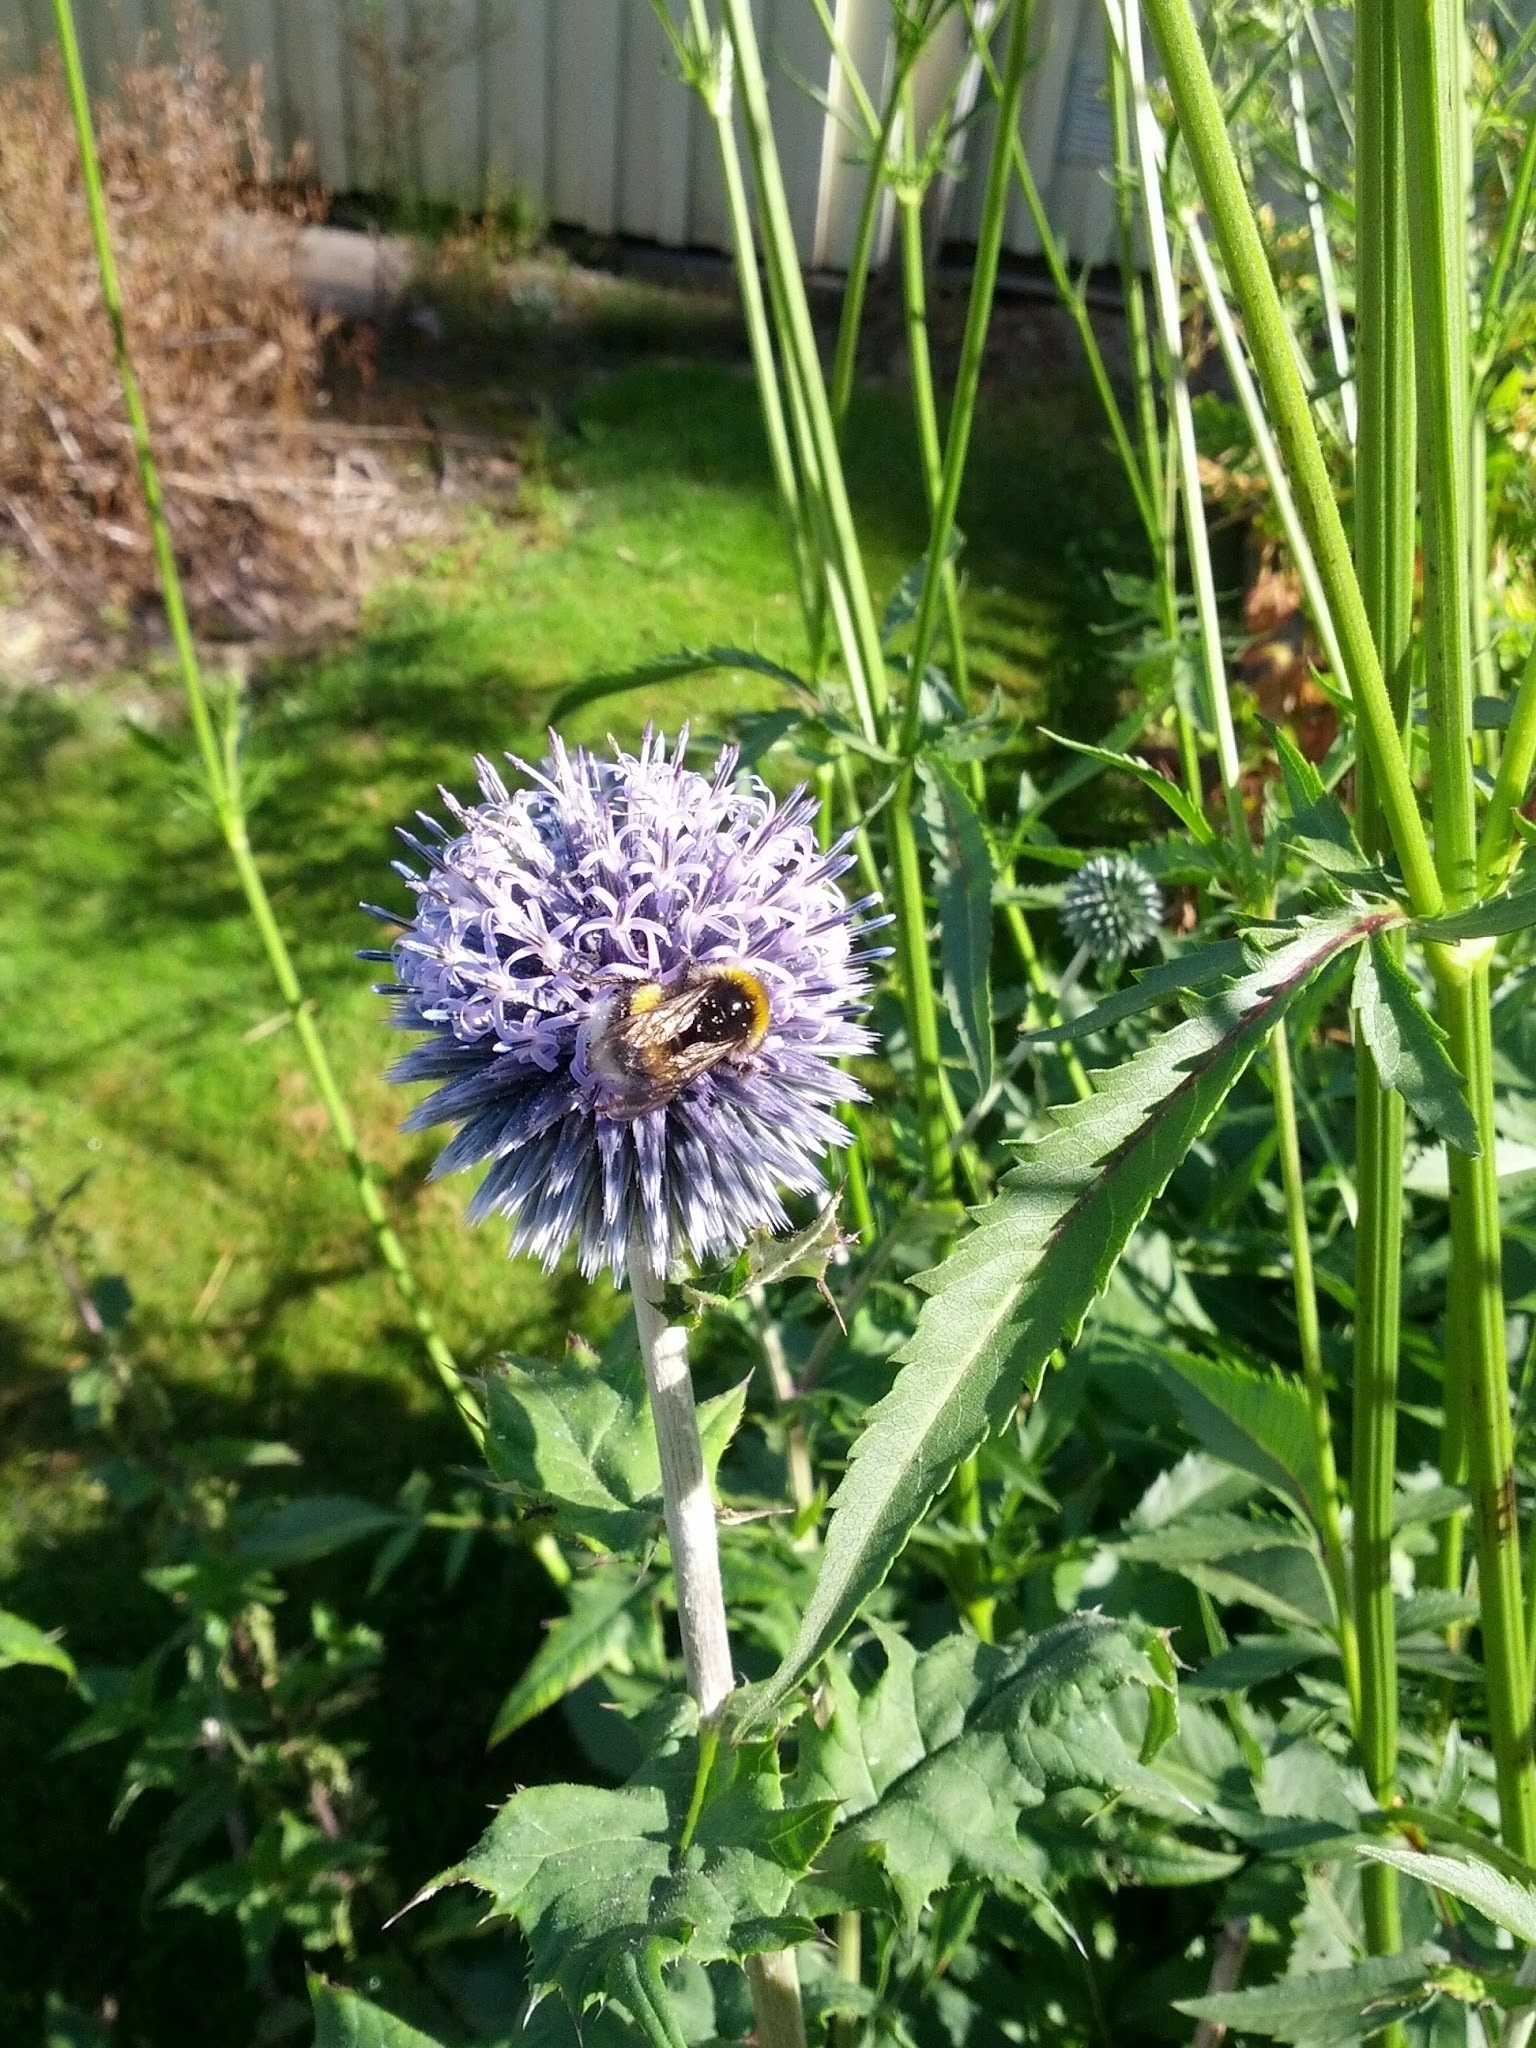 bumblebee in a flower